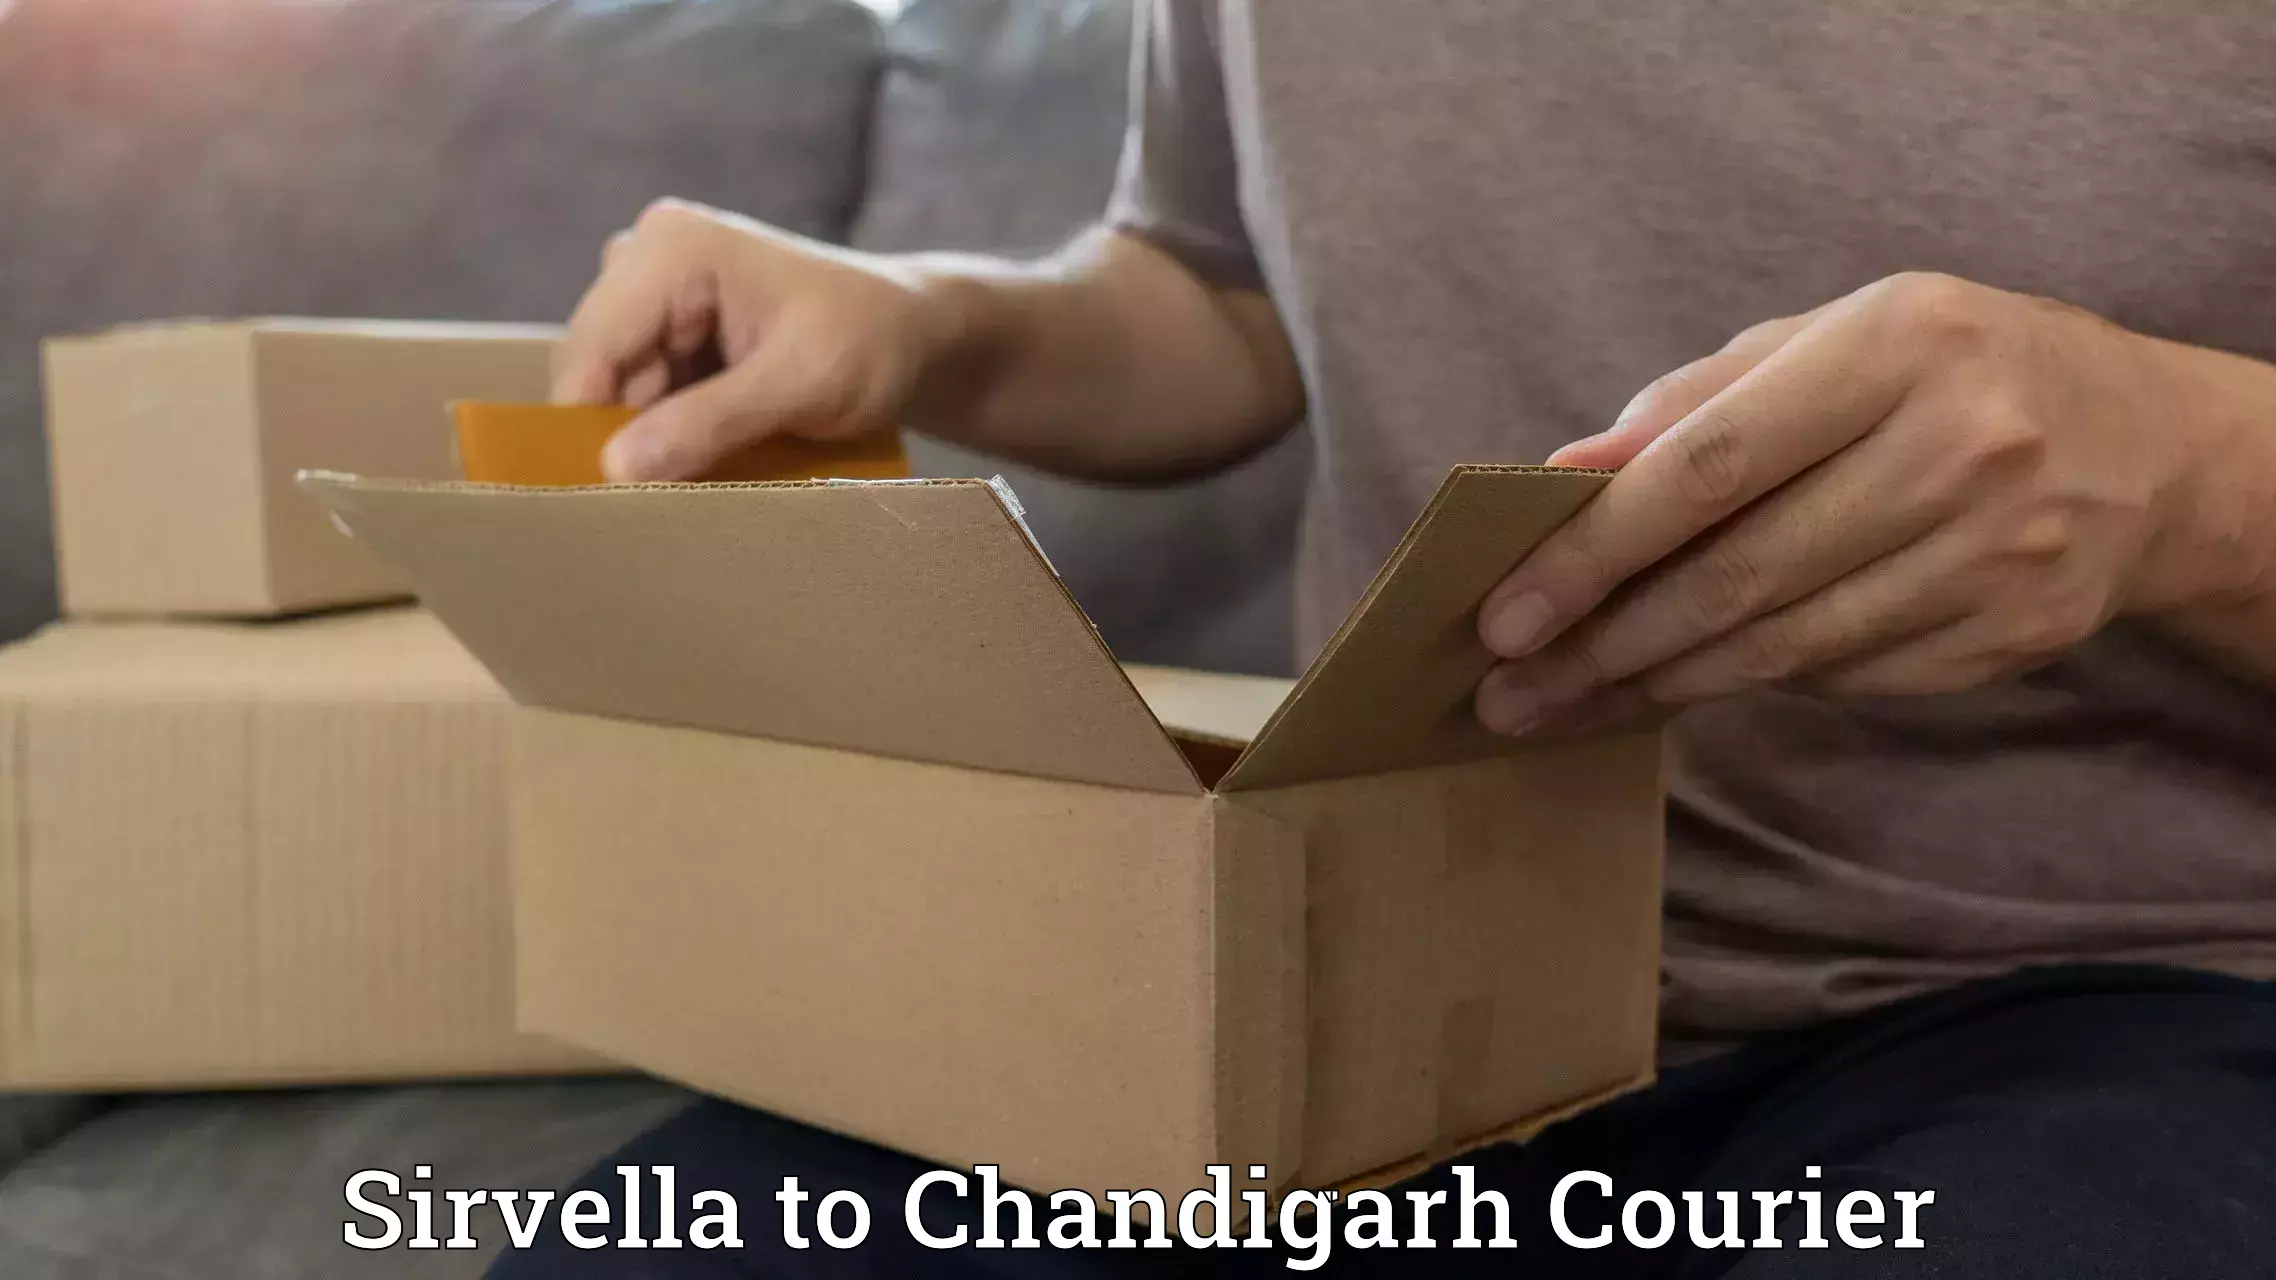 Courier service comparison in Sirvella to Chandigarh